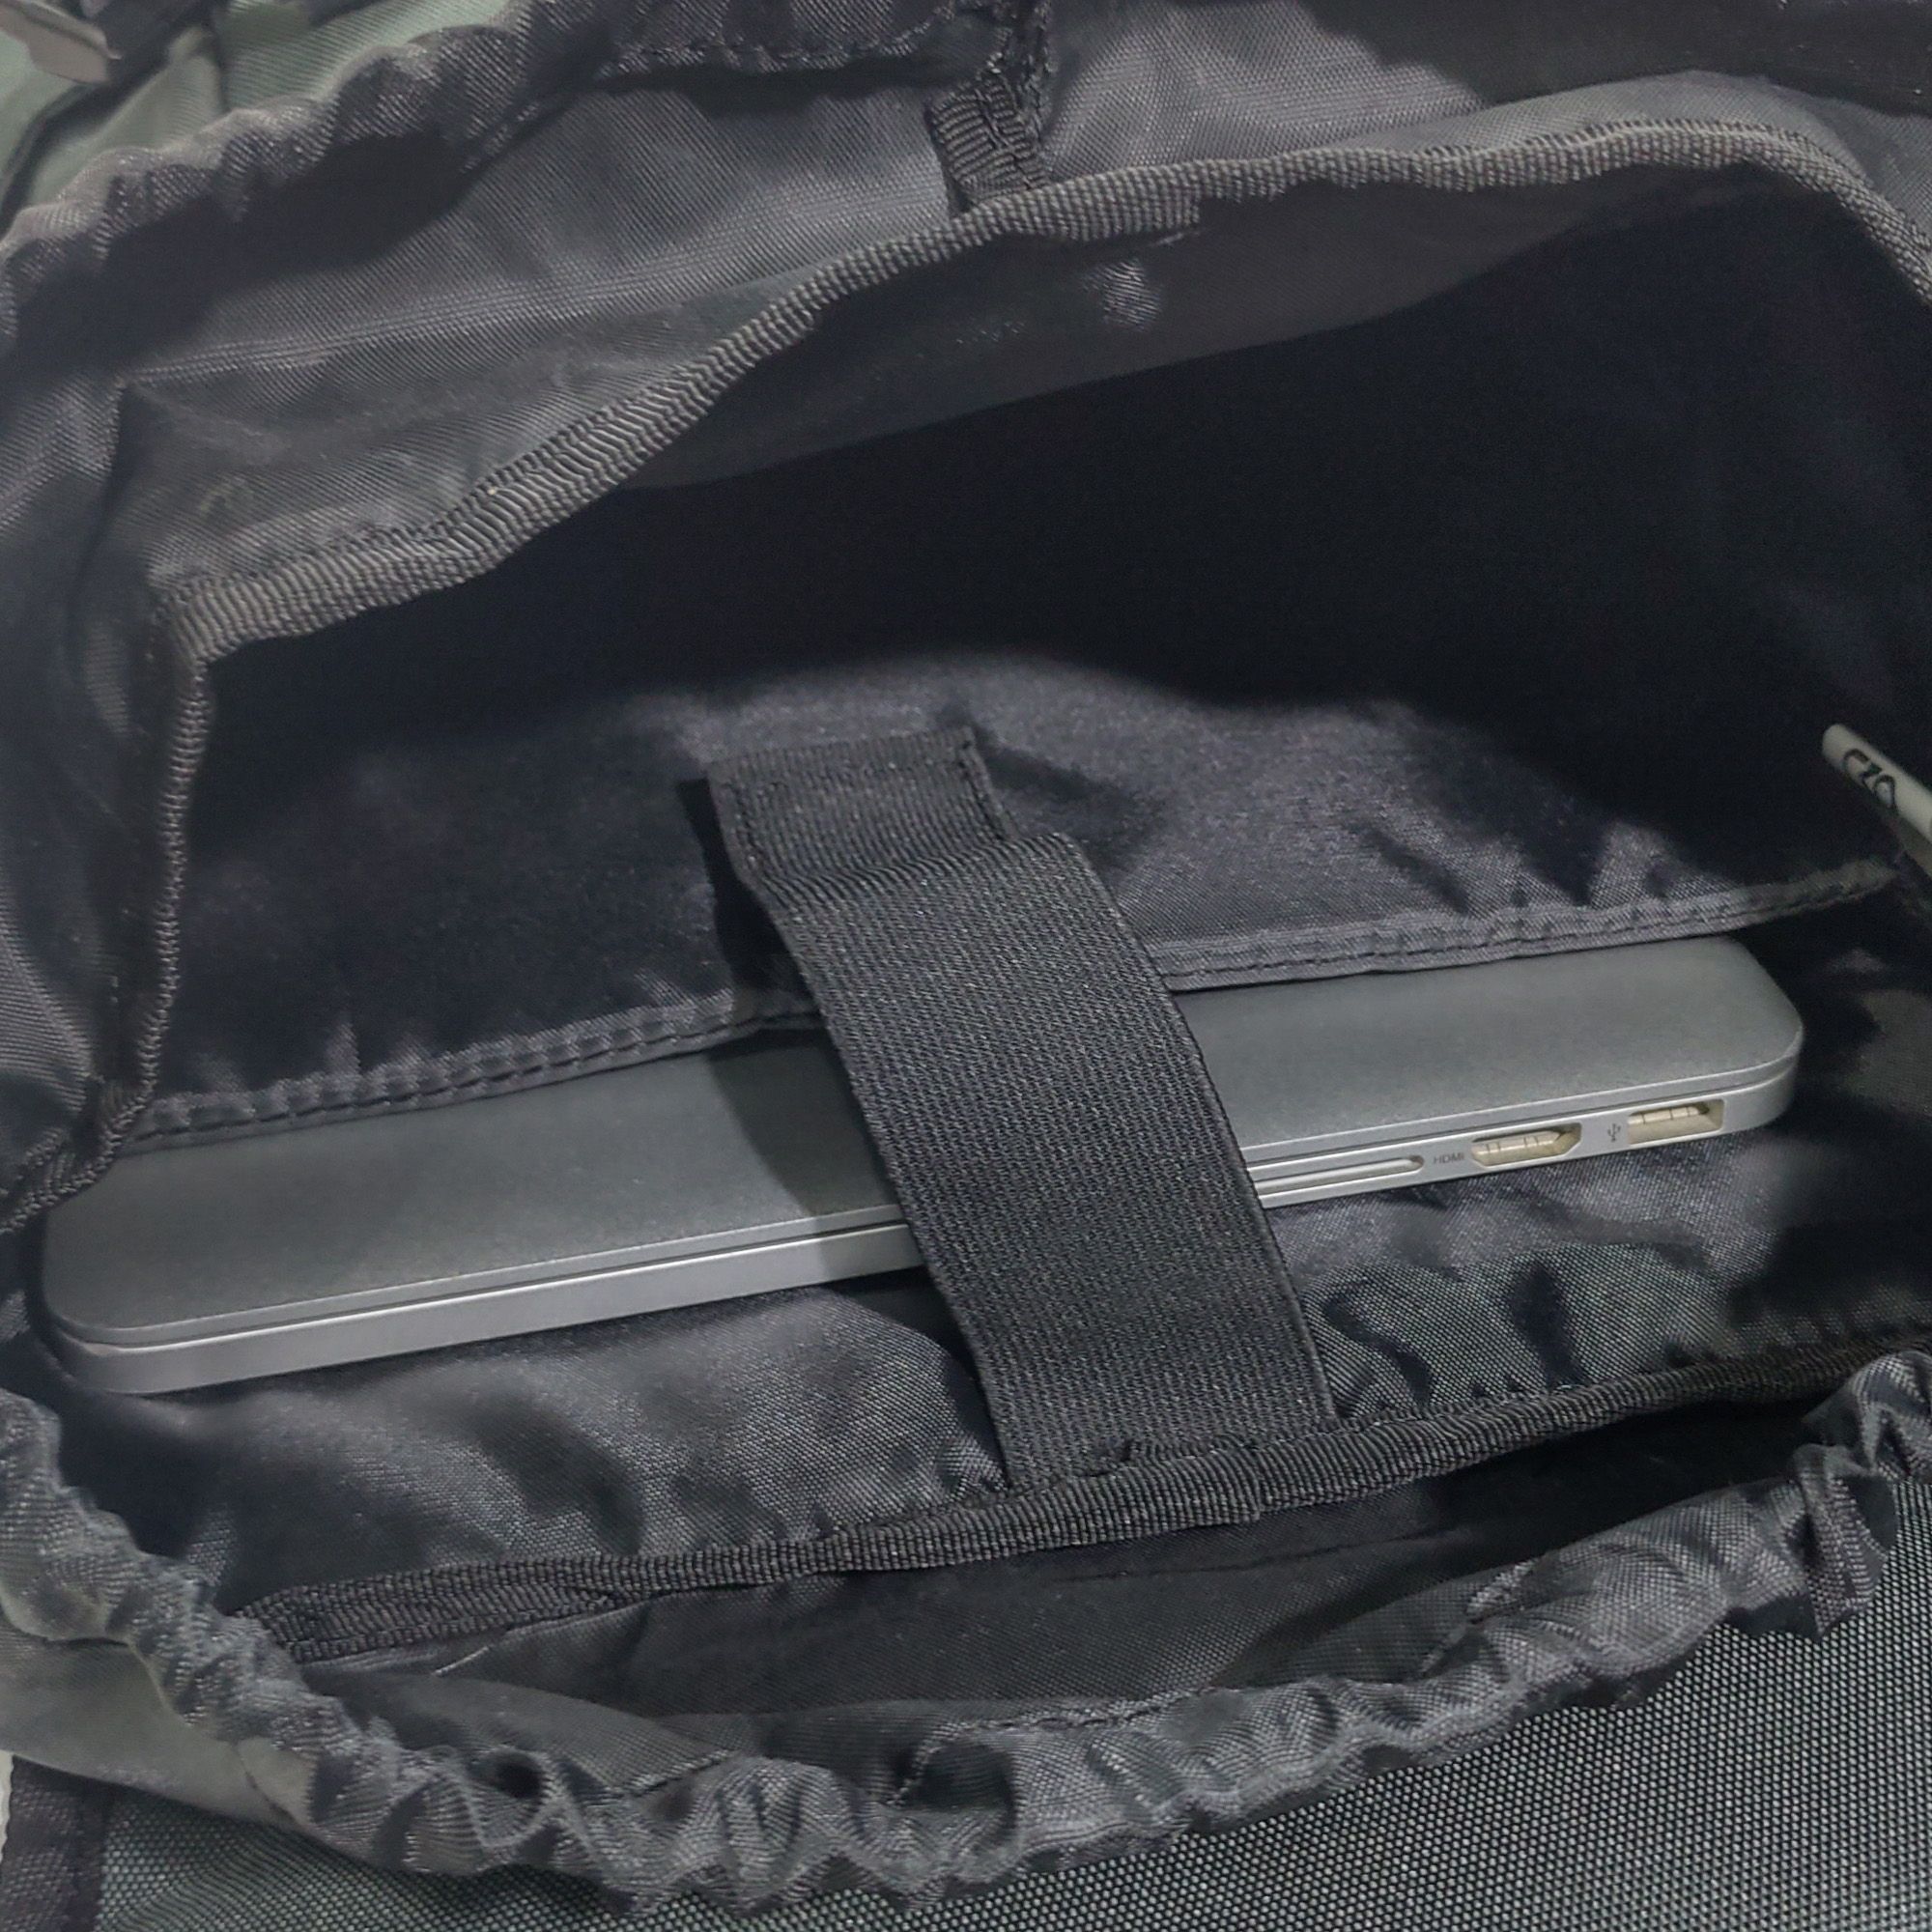  Balos SKY FLAP D.Grey Backpack - Balo Laptop thời trang 